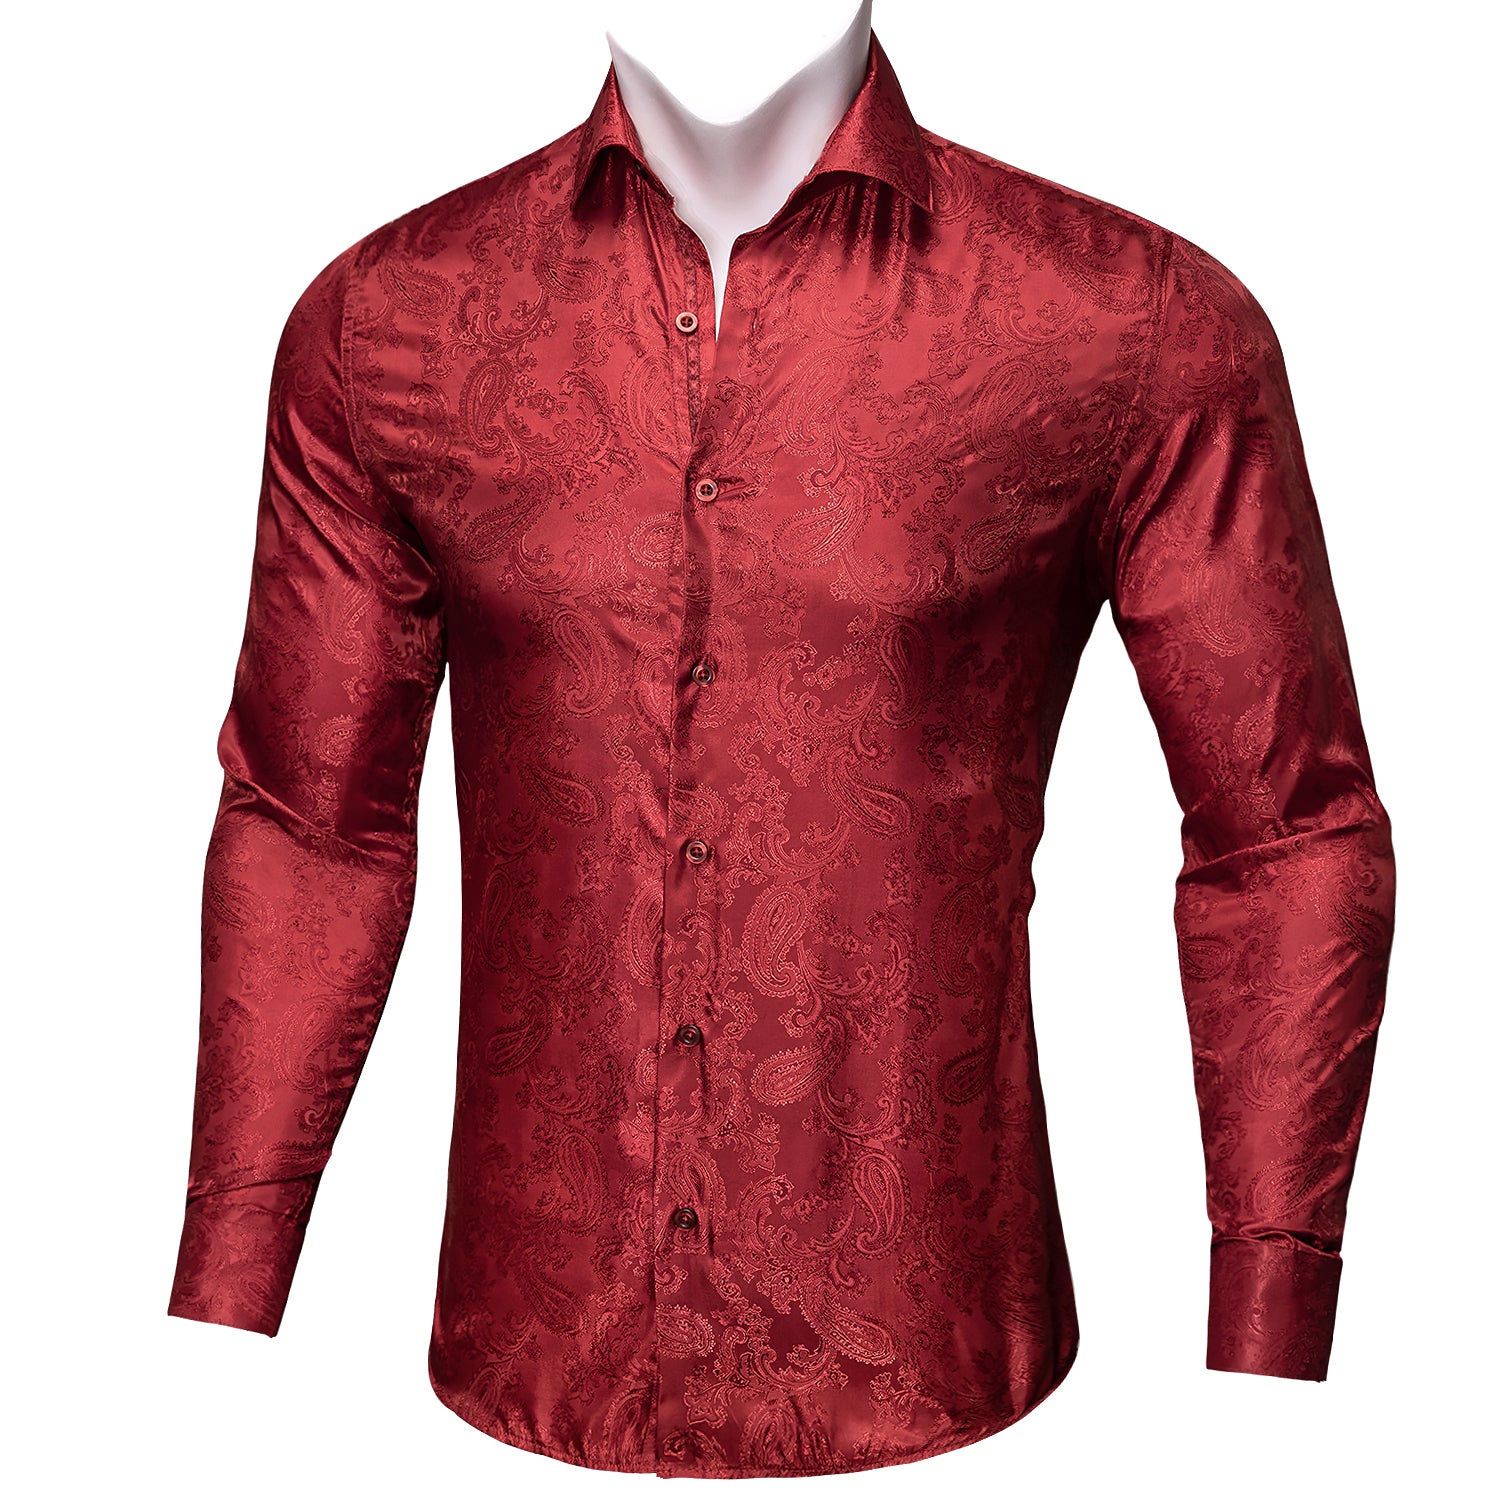 Barry.wang Fashionable Bright Red Paisley Long Sleeves Silk Shirt